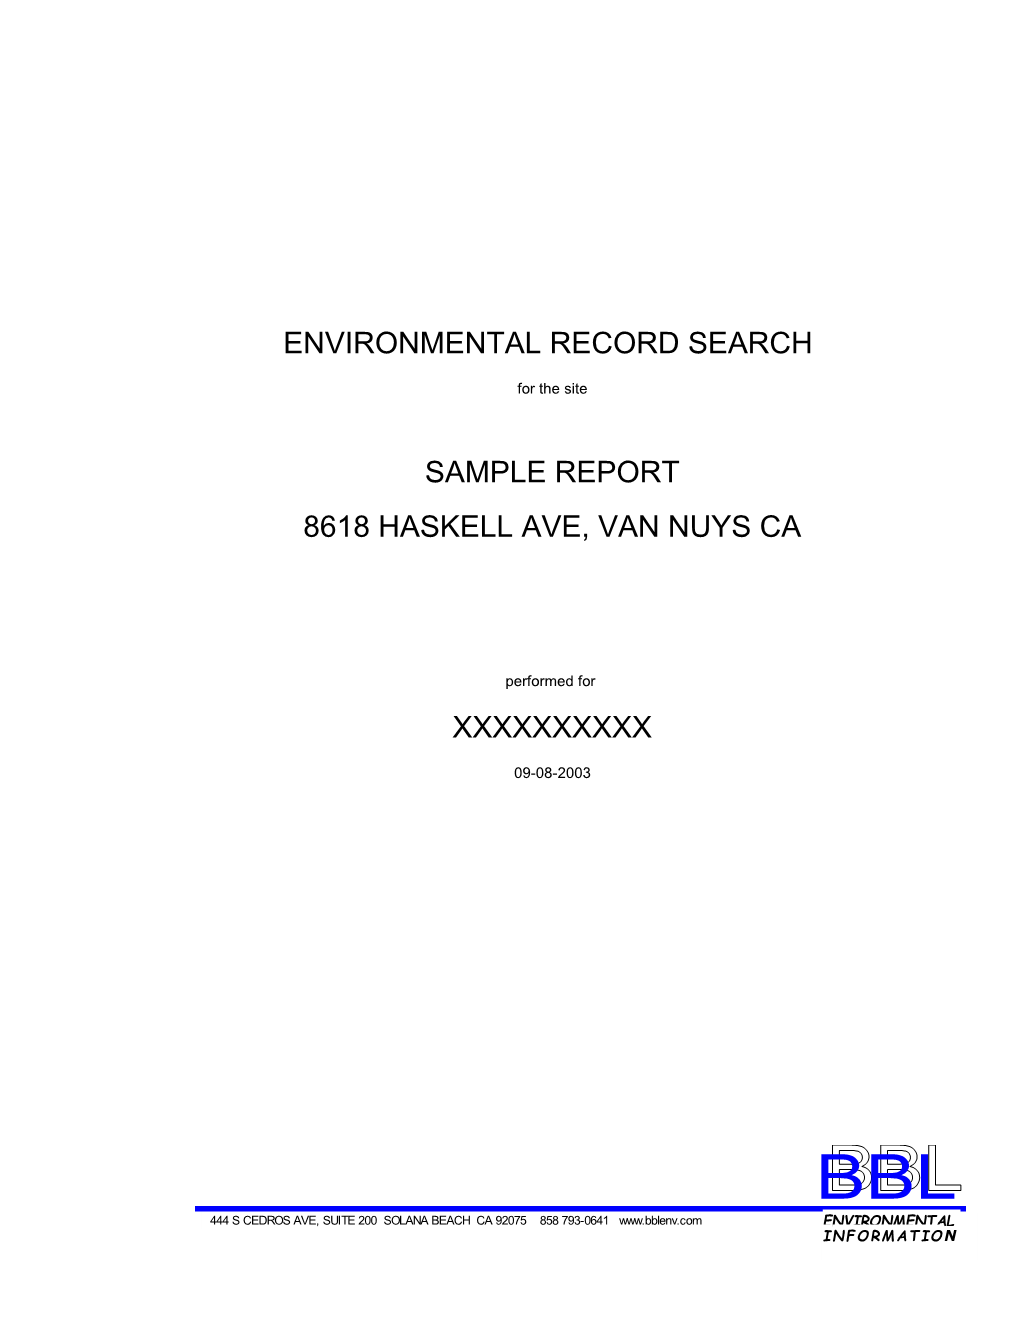 Environmental Record Search